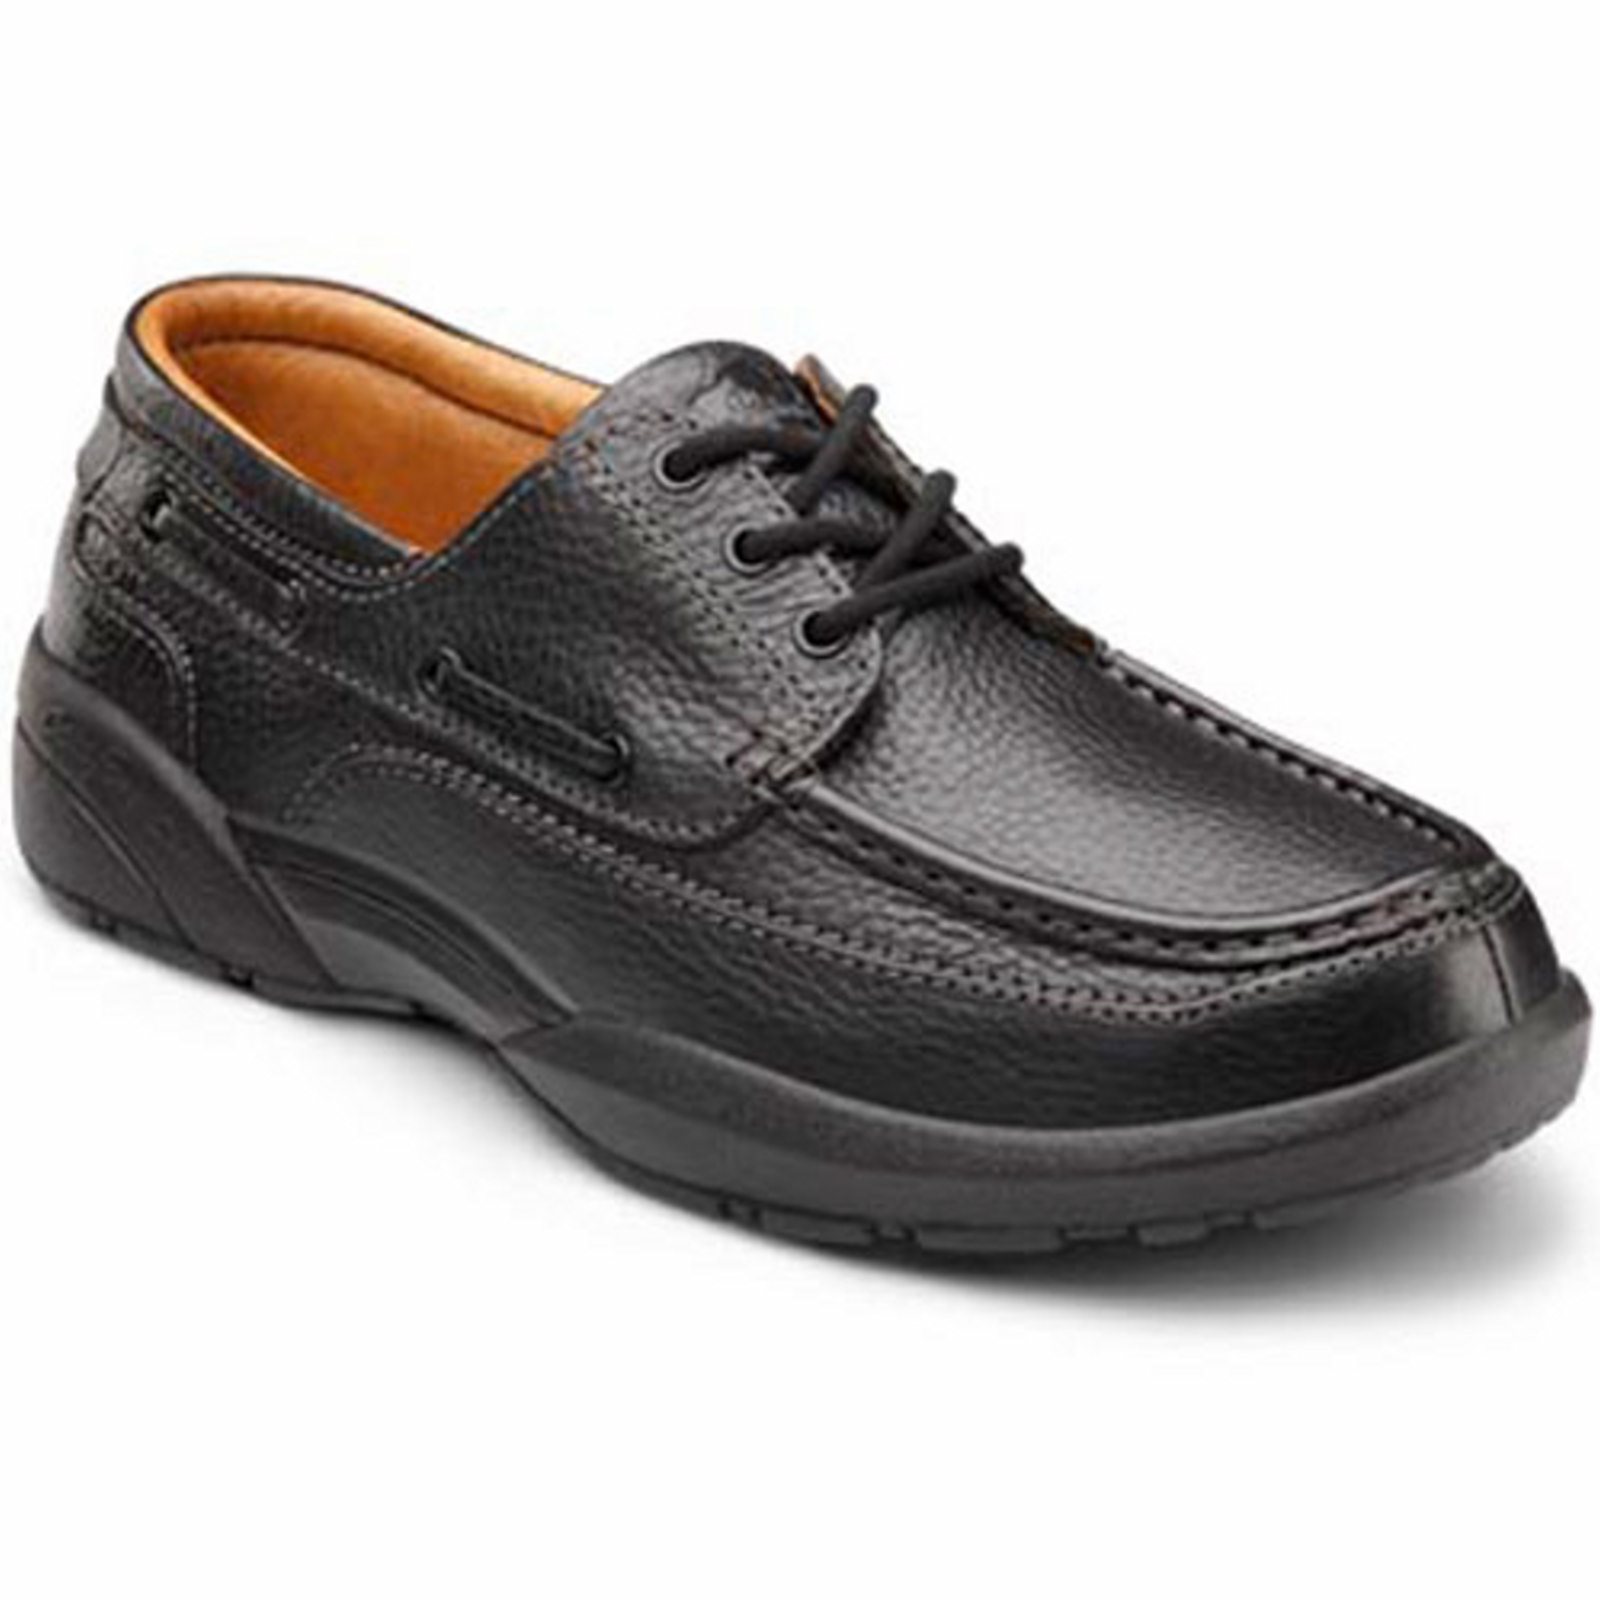 Dr. Comfort Patrick Men's Boat Shoe: 10.5 Medium (B/D) Black Lace - image 1 of 4